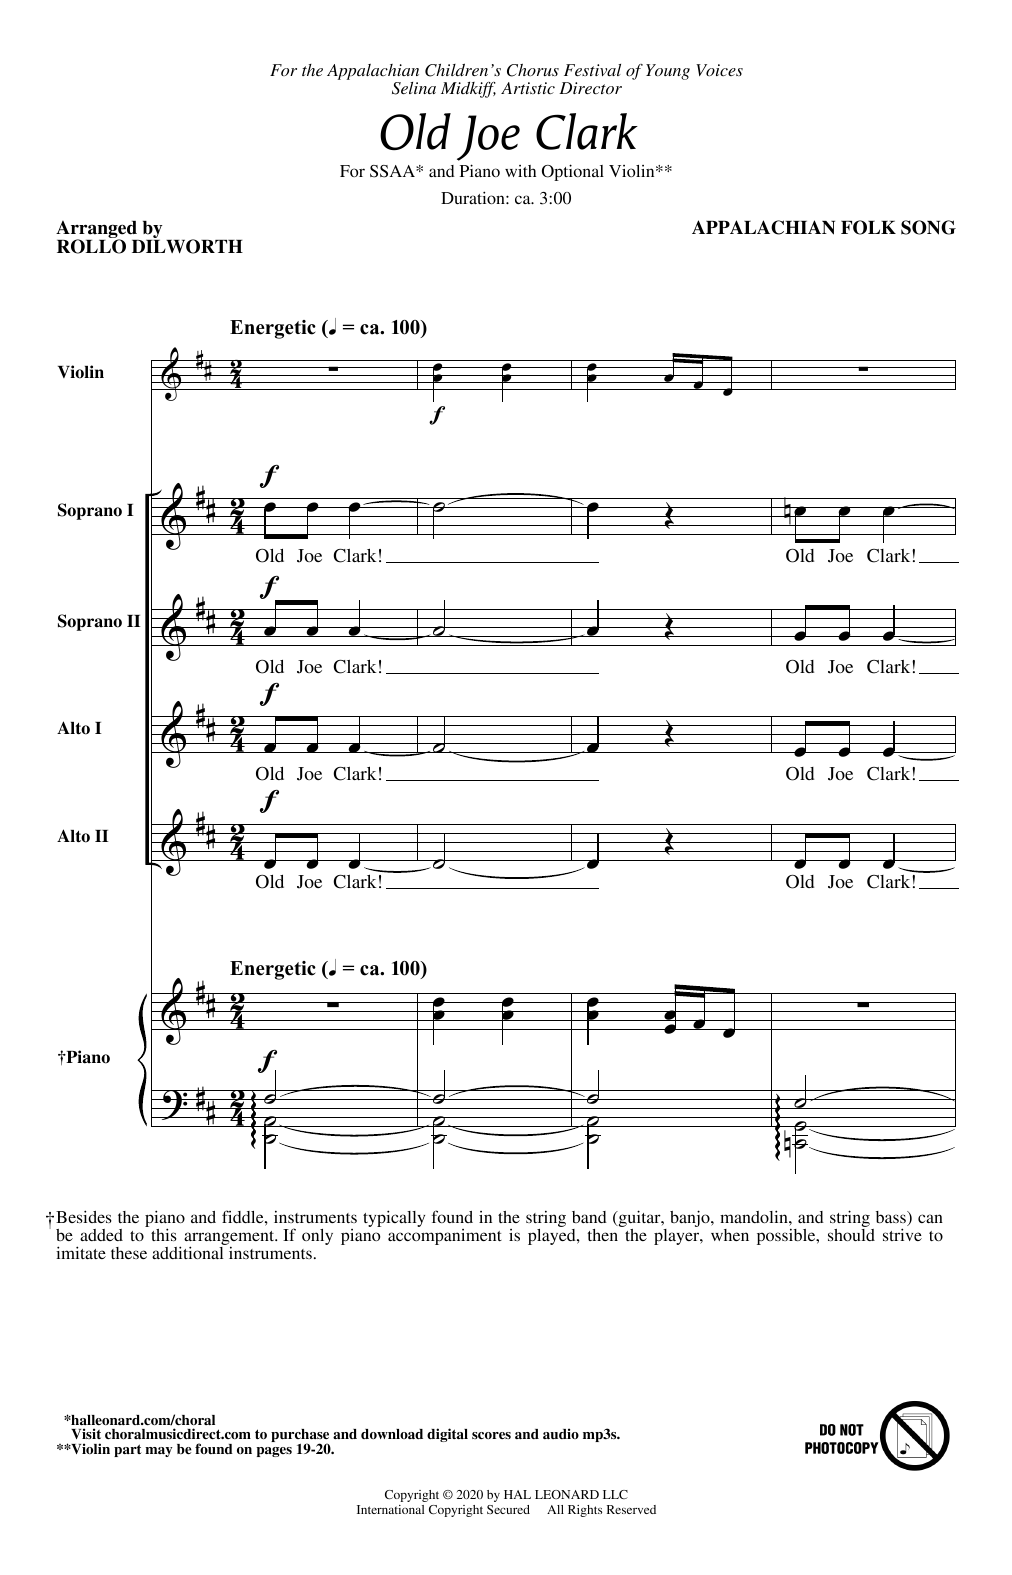 Appalachian Folk Song Old Joe Clark (arr. Rollo Dilworth) sheet music notes and chords arranged for SSAA Choir